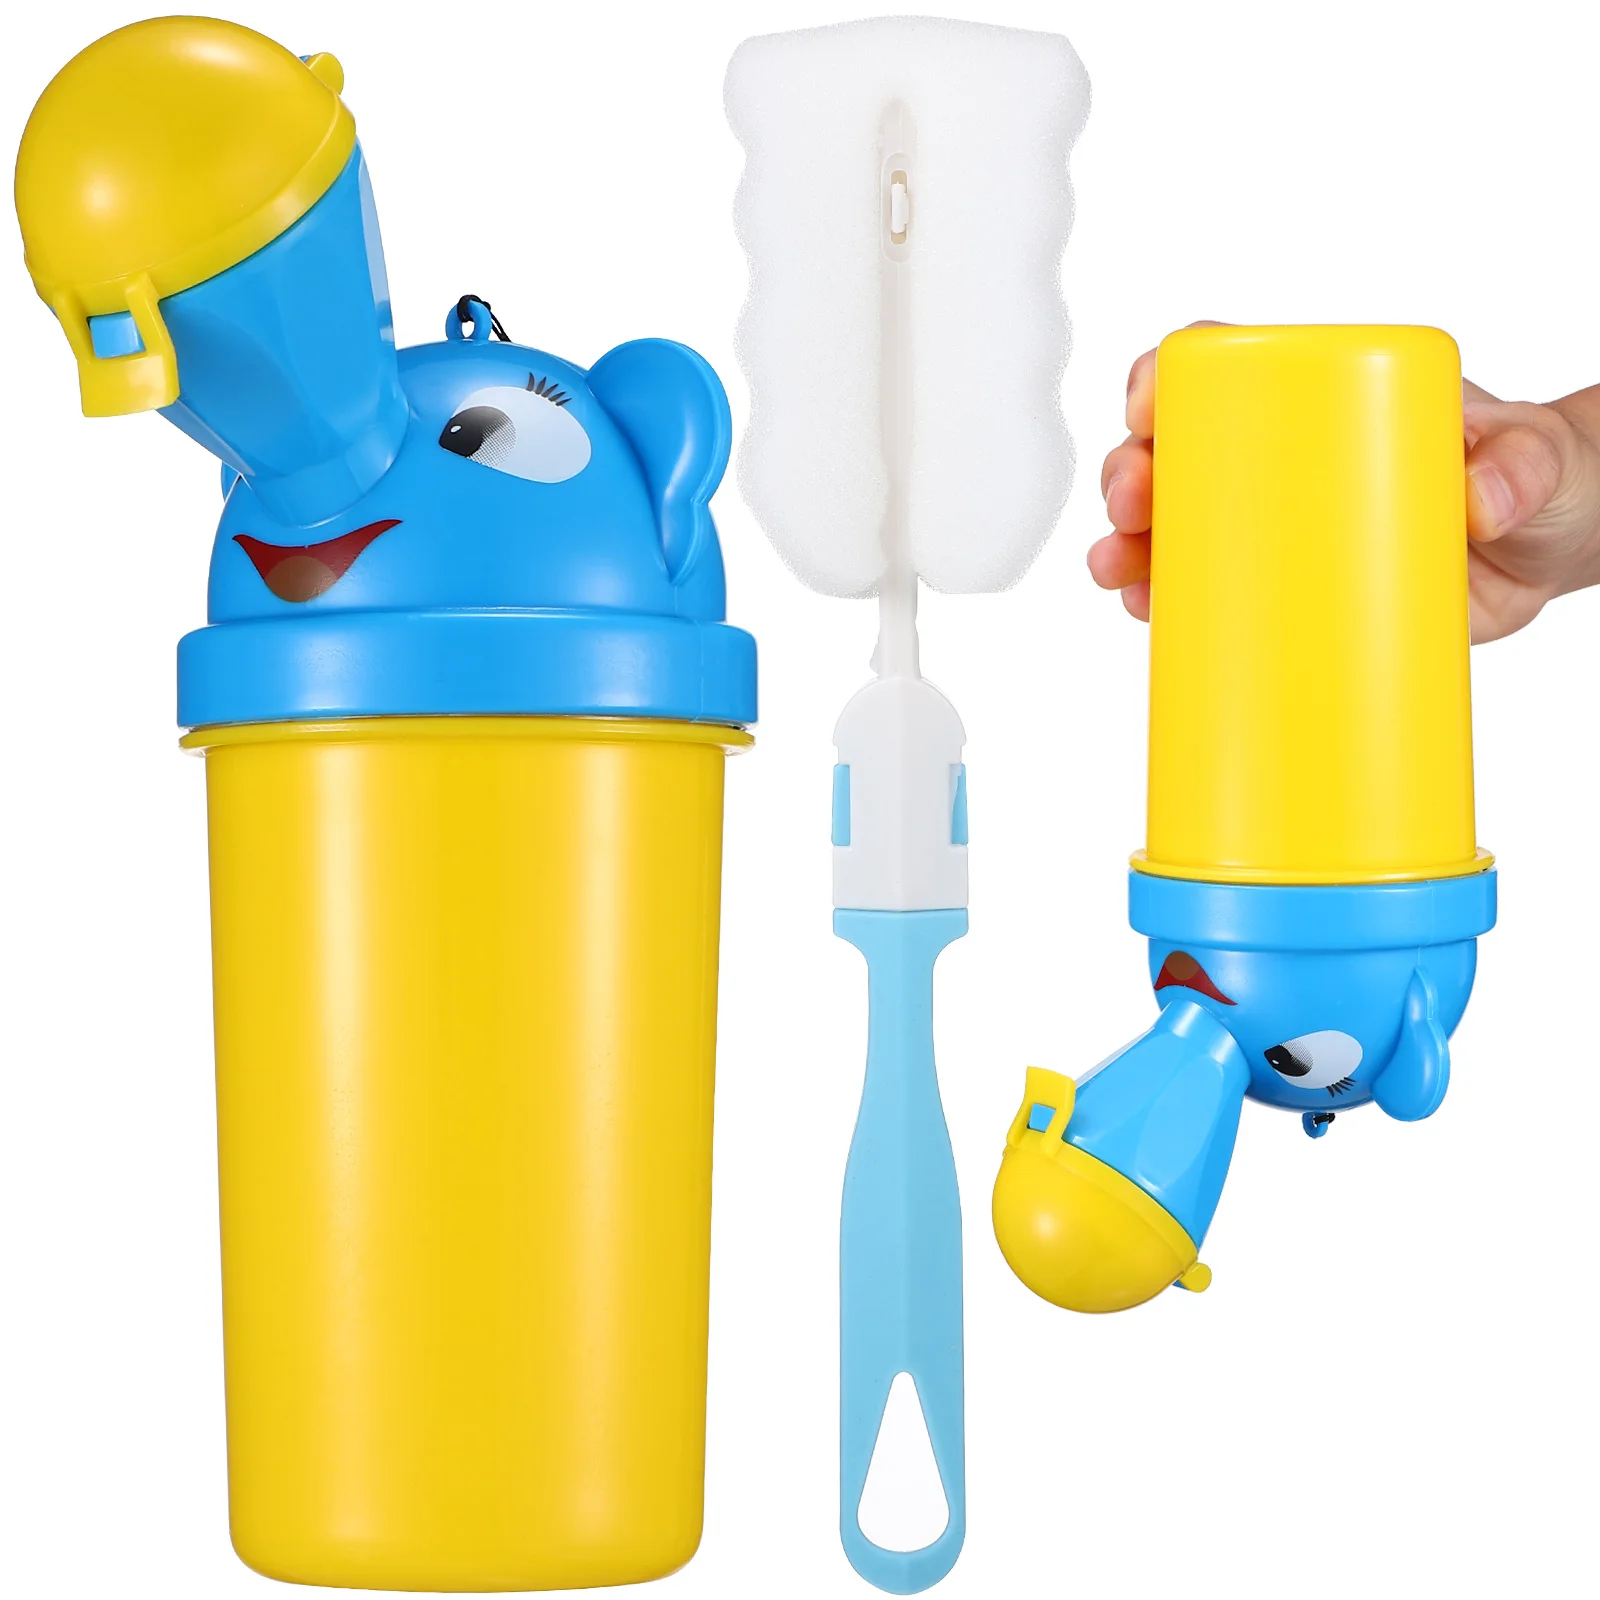 

Portable Baby Child Potty Portable Potty For Toddler Potty Brush Cartoon Elephant Bedpan Urinal